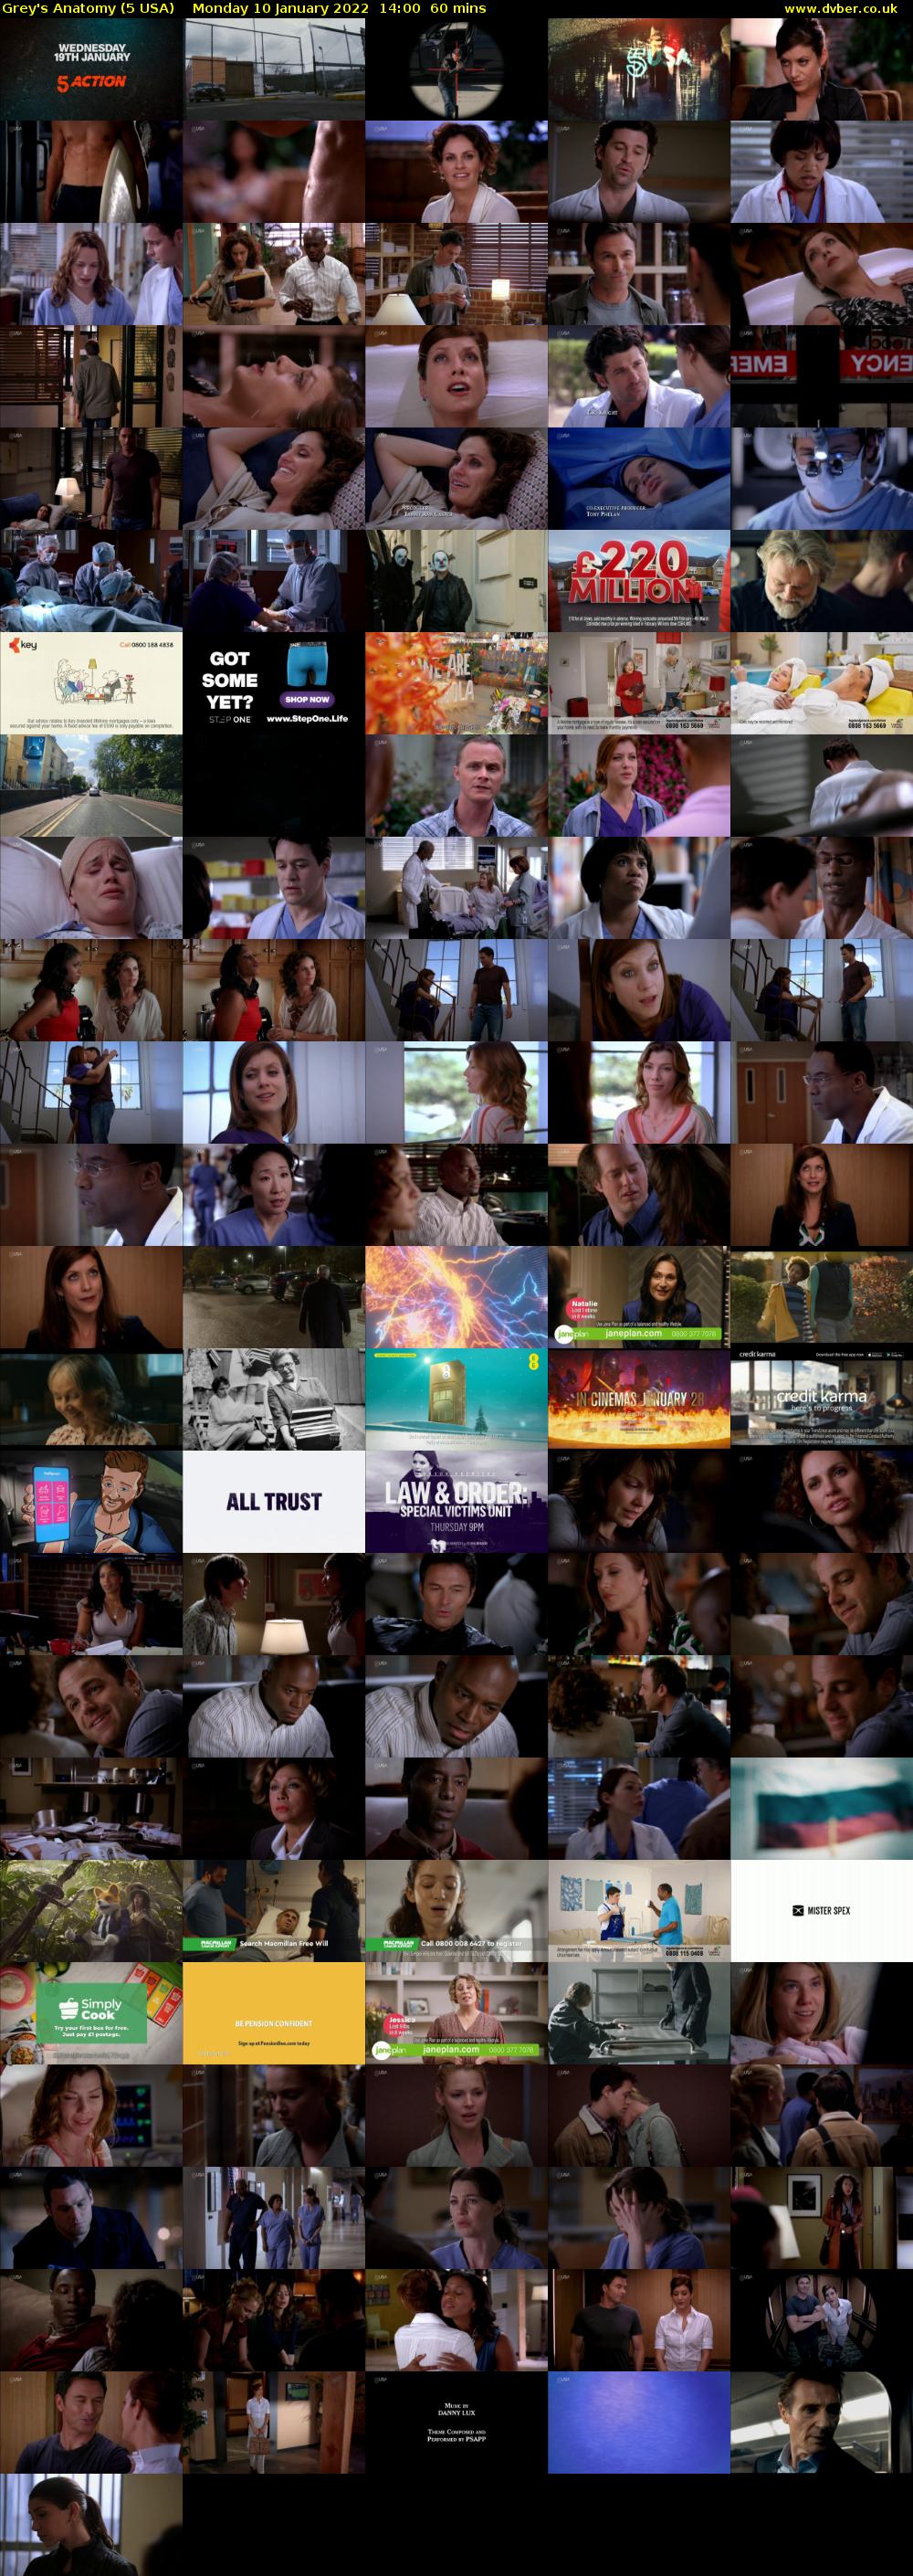 Grey's Anatomy (5 USA) Monday 10 January 2022 14:00 - 15:00